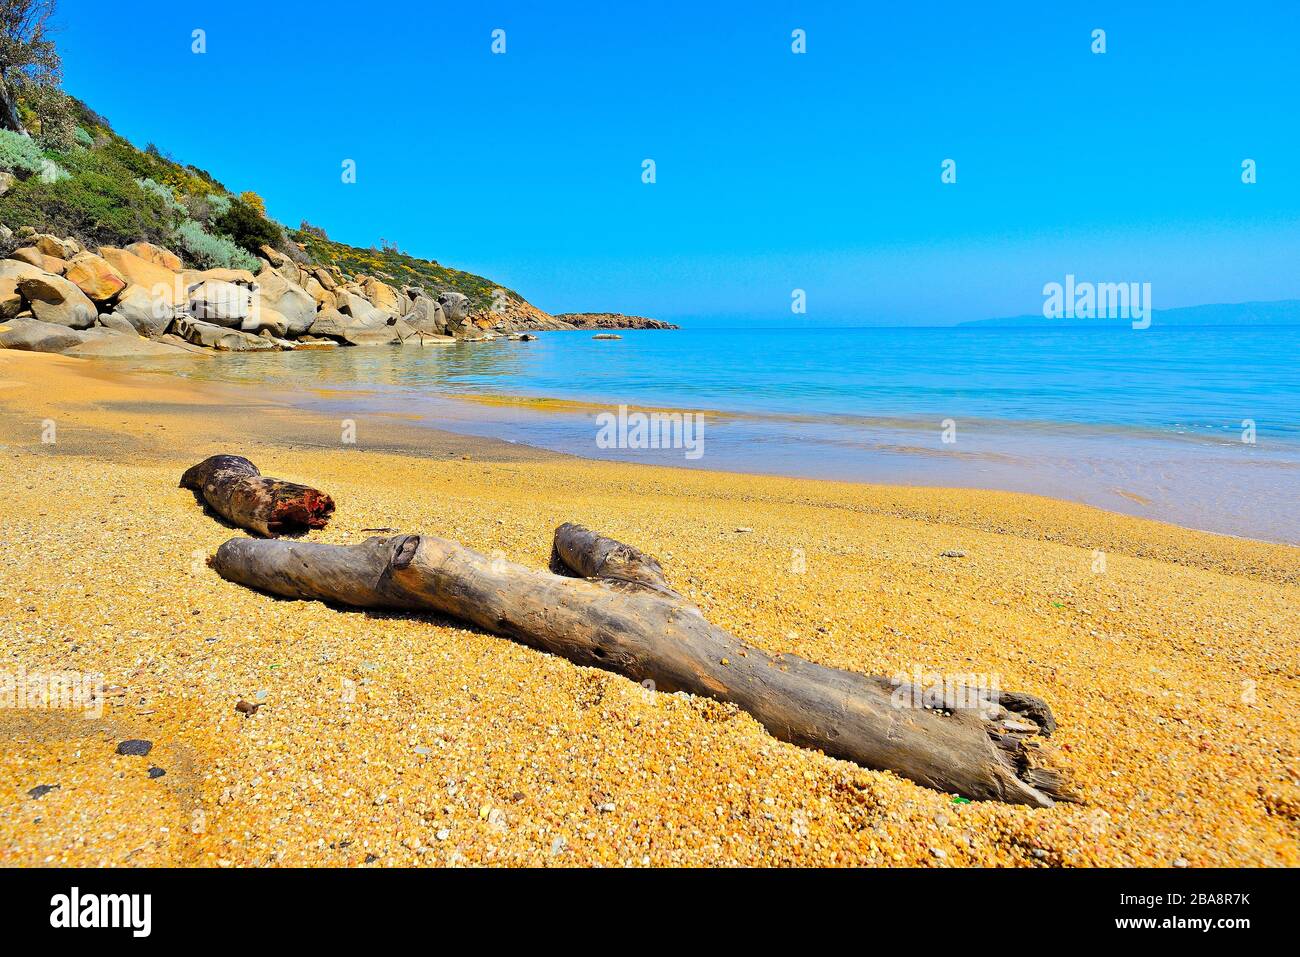 Caldane Beach, Isola del Giglio, Tyrrhenian Sea, Tuscany, Italy Stock Photo